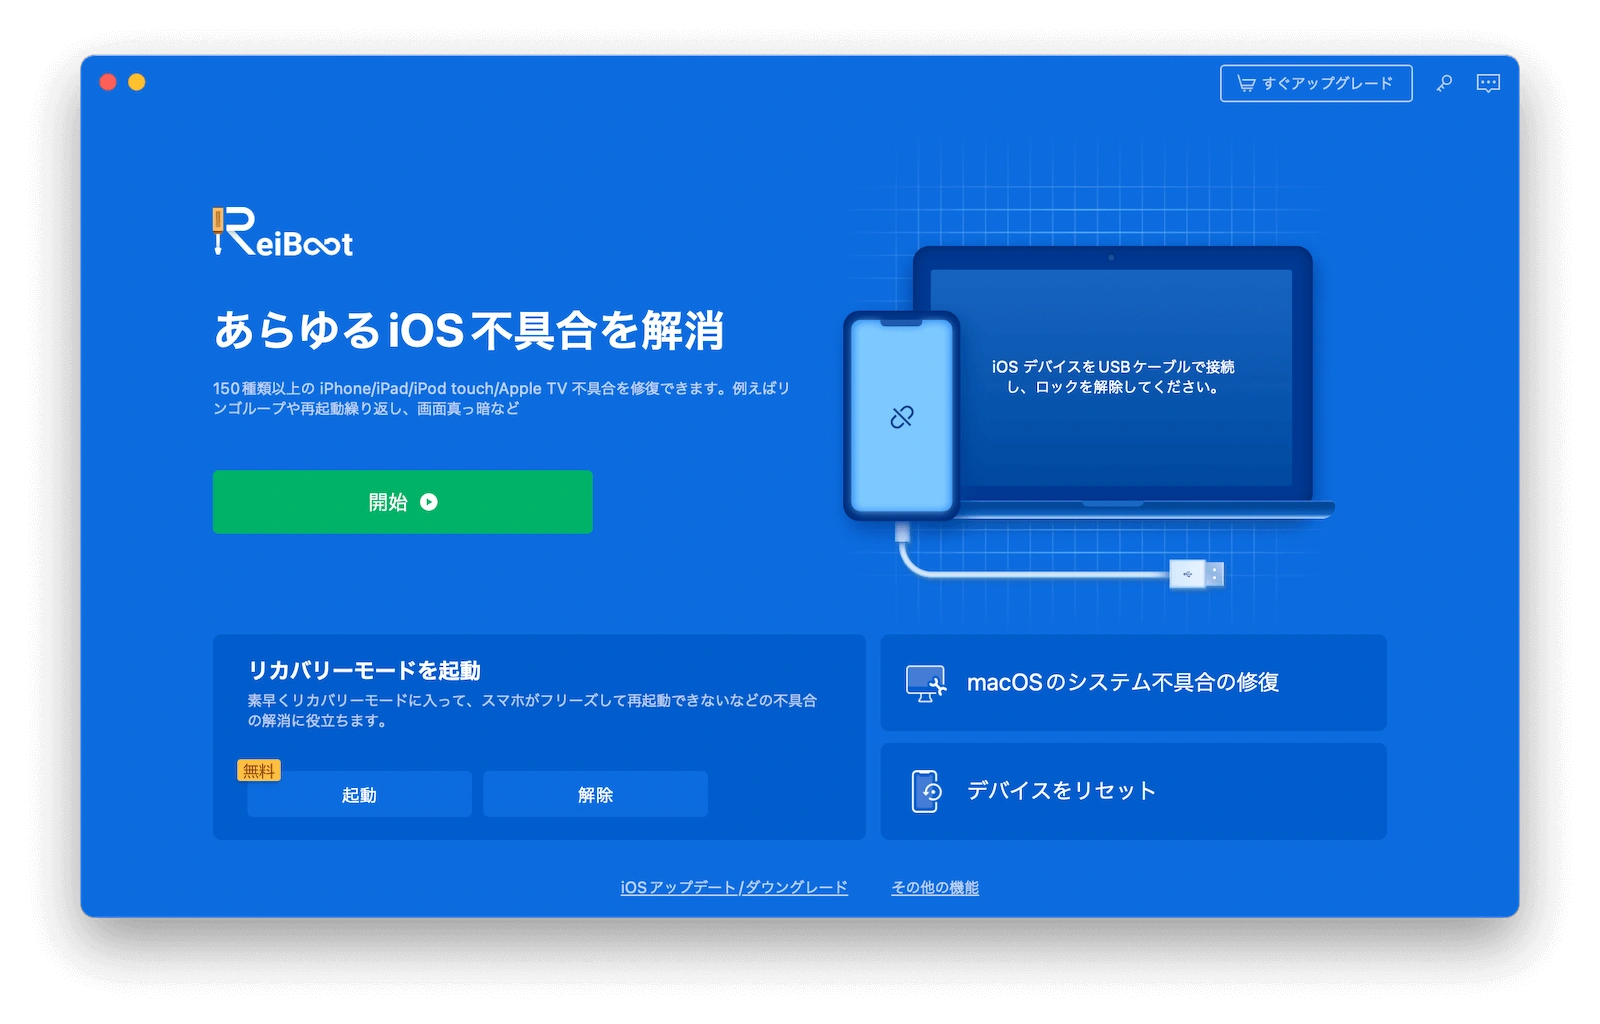 iOSシステム修復ソフト - ReiBoot